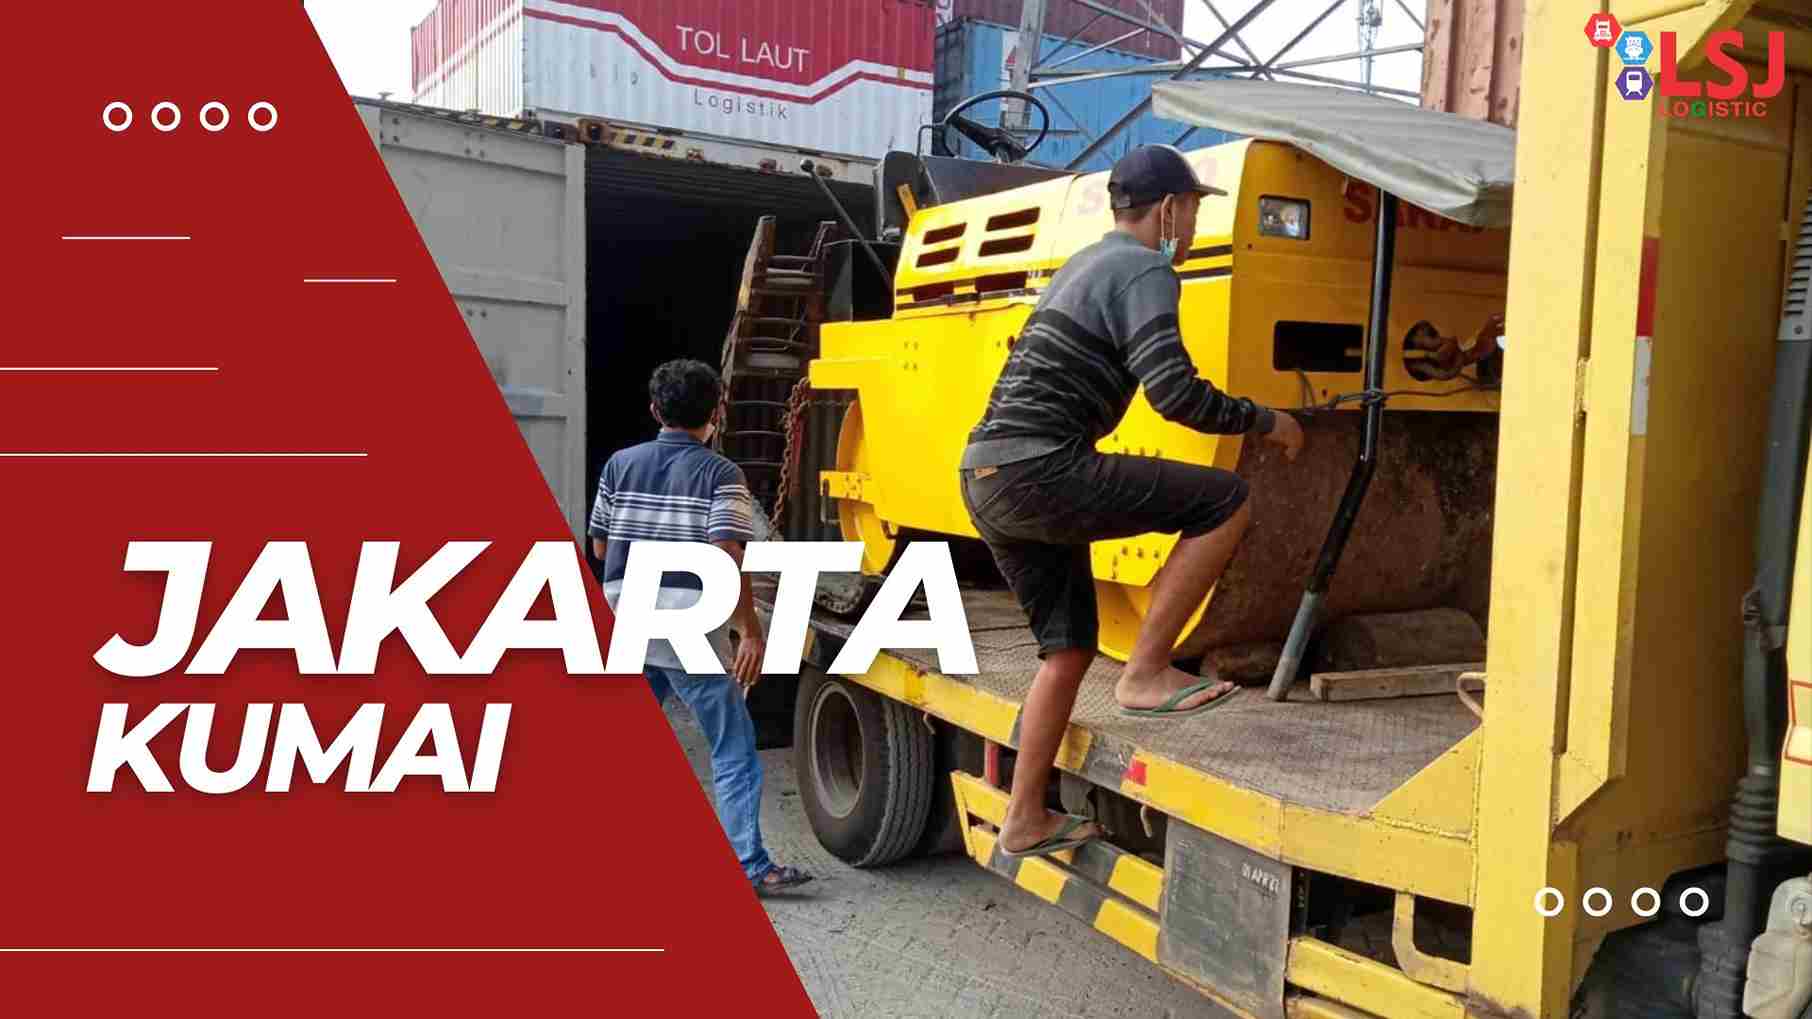 Ongkos Kirim Container Jakarta Kumai